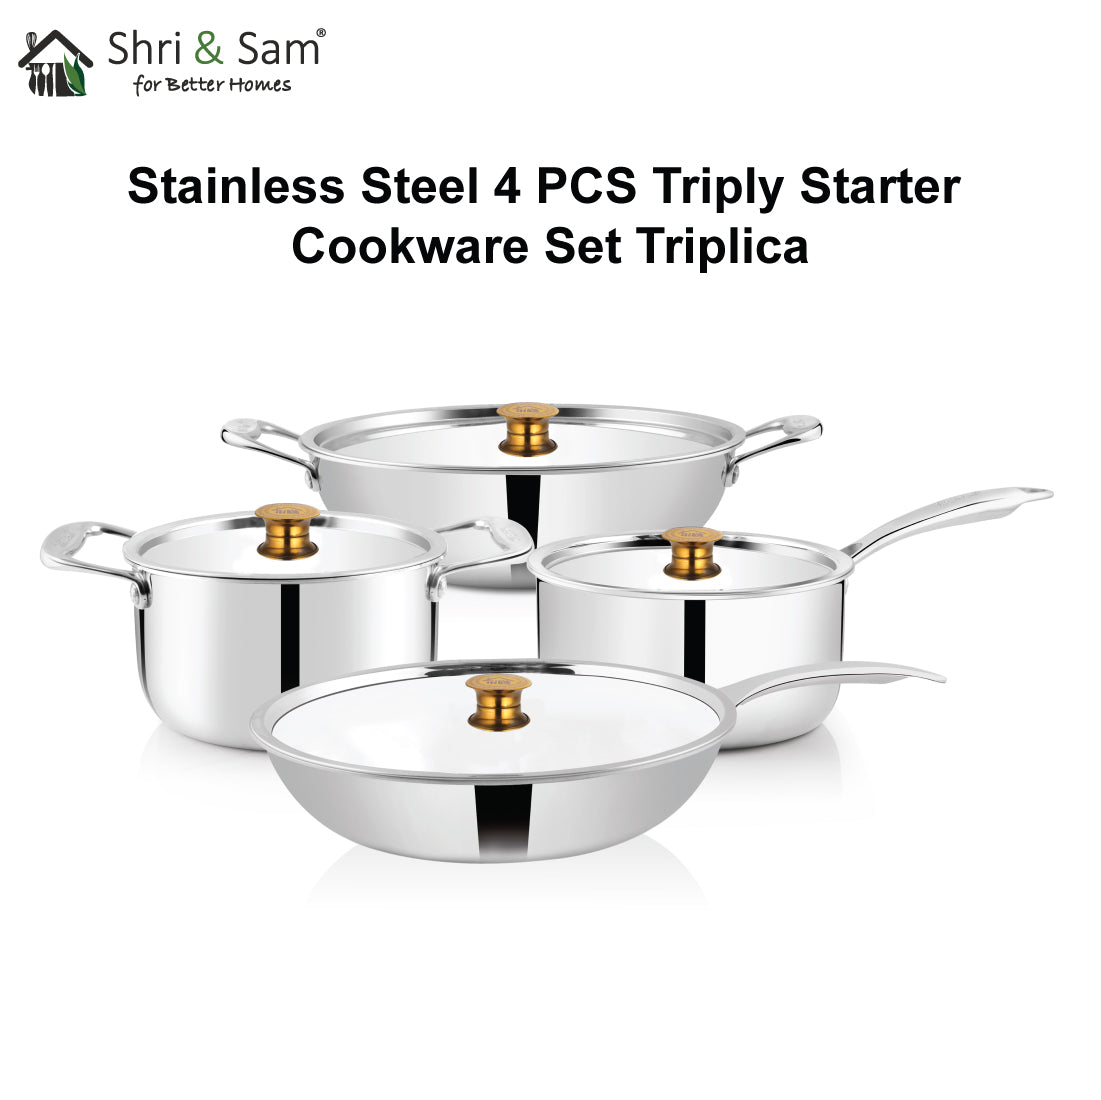 Stainless Steel 4 PCS Triply STARTER Cookware Set Triplica